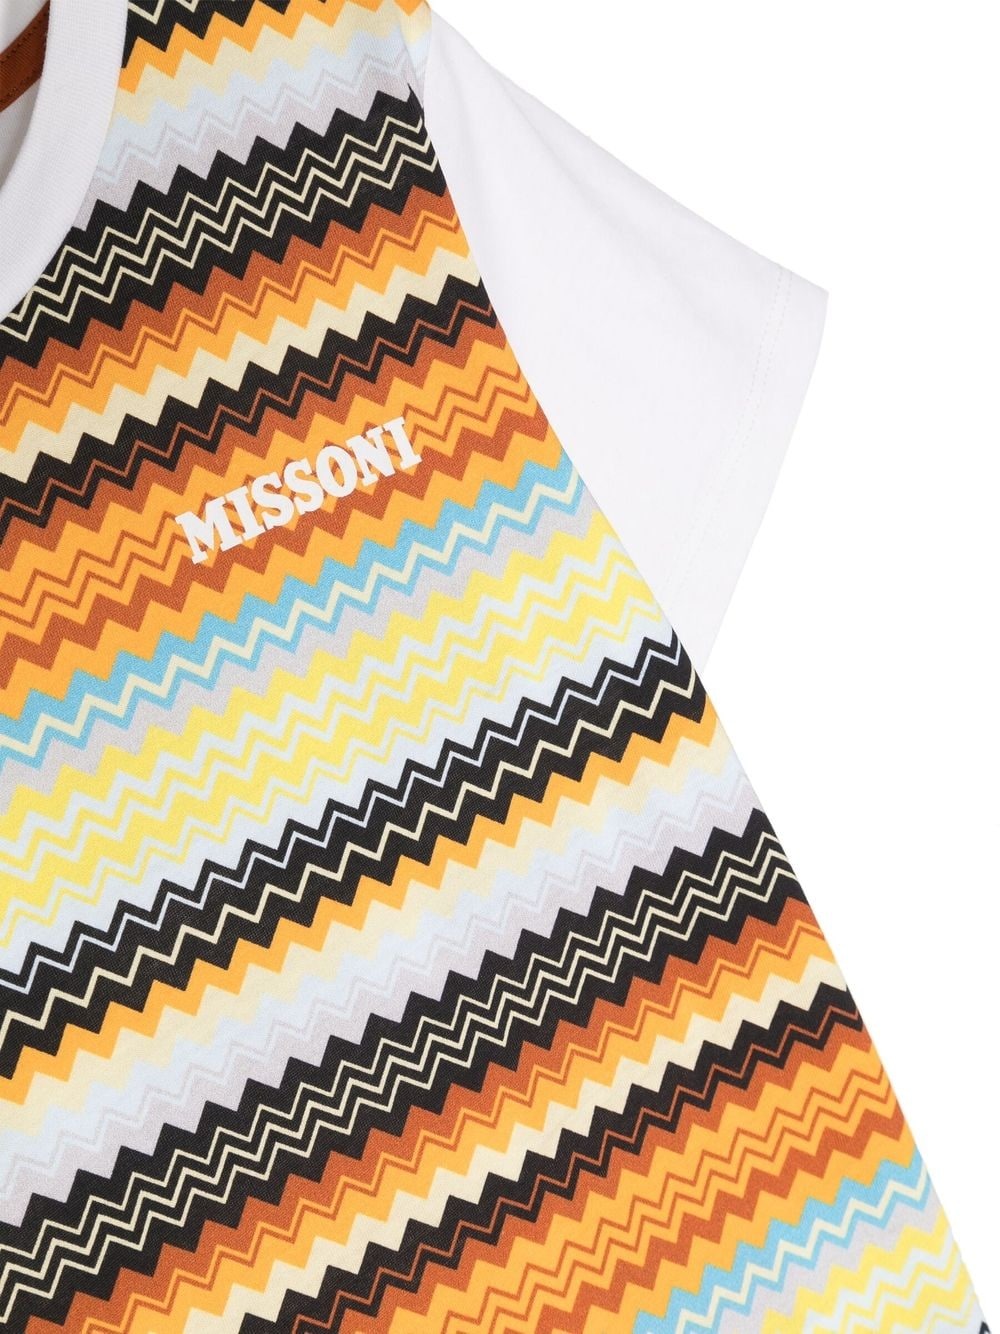 Missoni Kids logo-print knitted top - Yellow